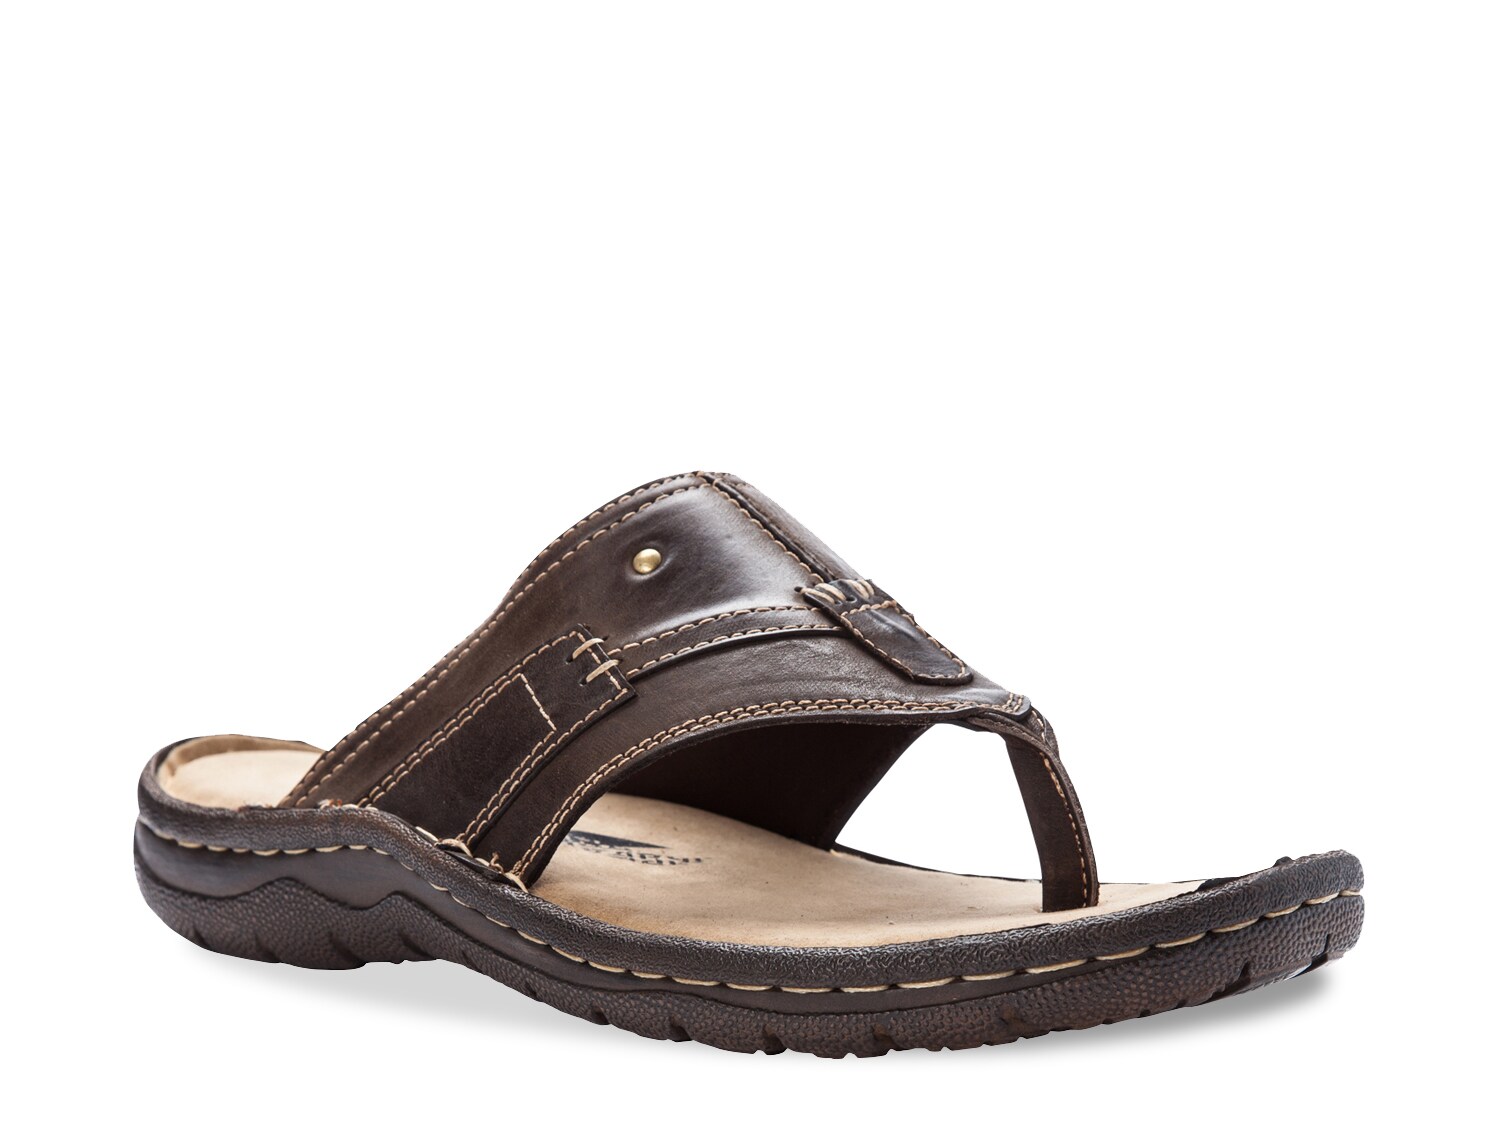 mens wide width sandals